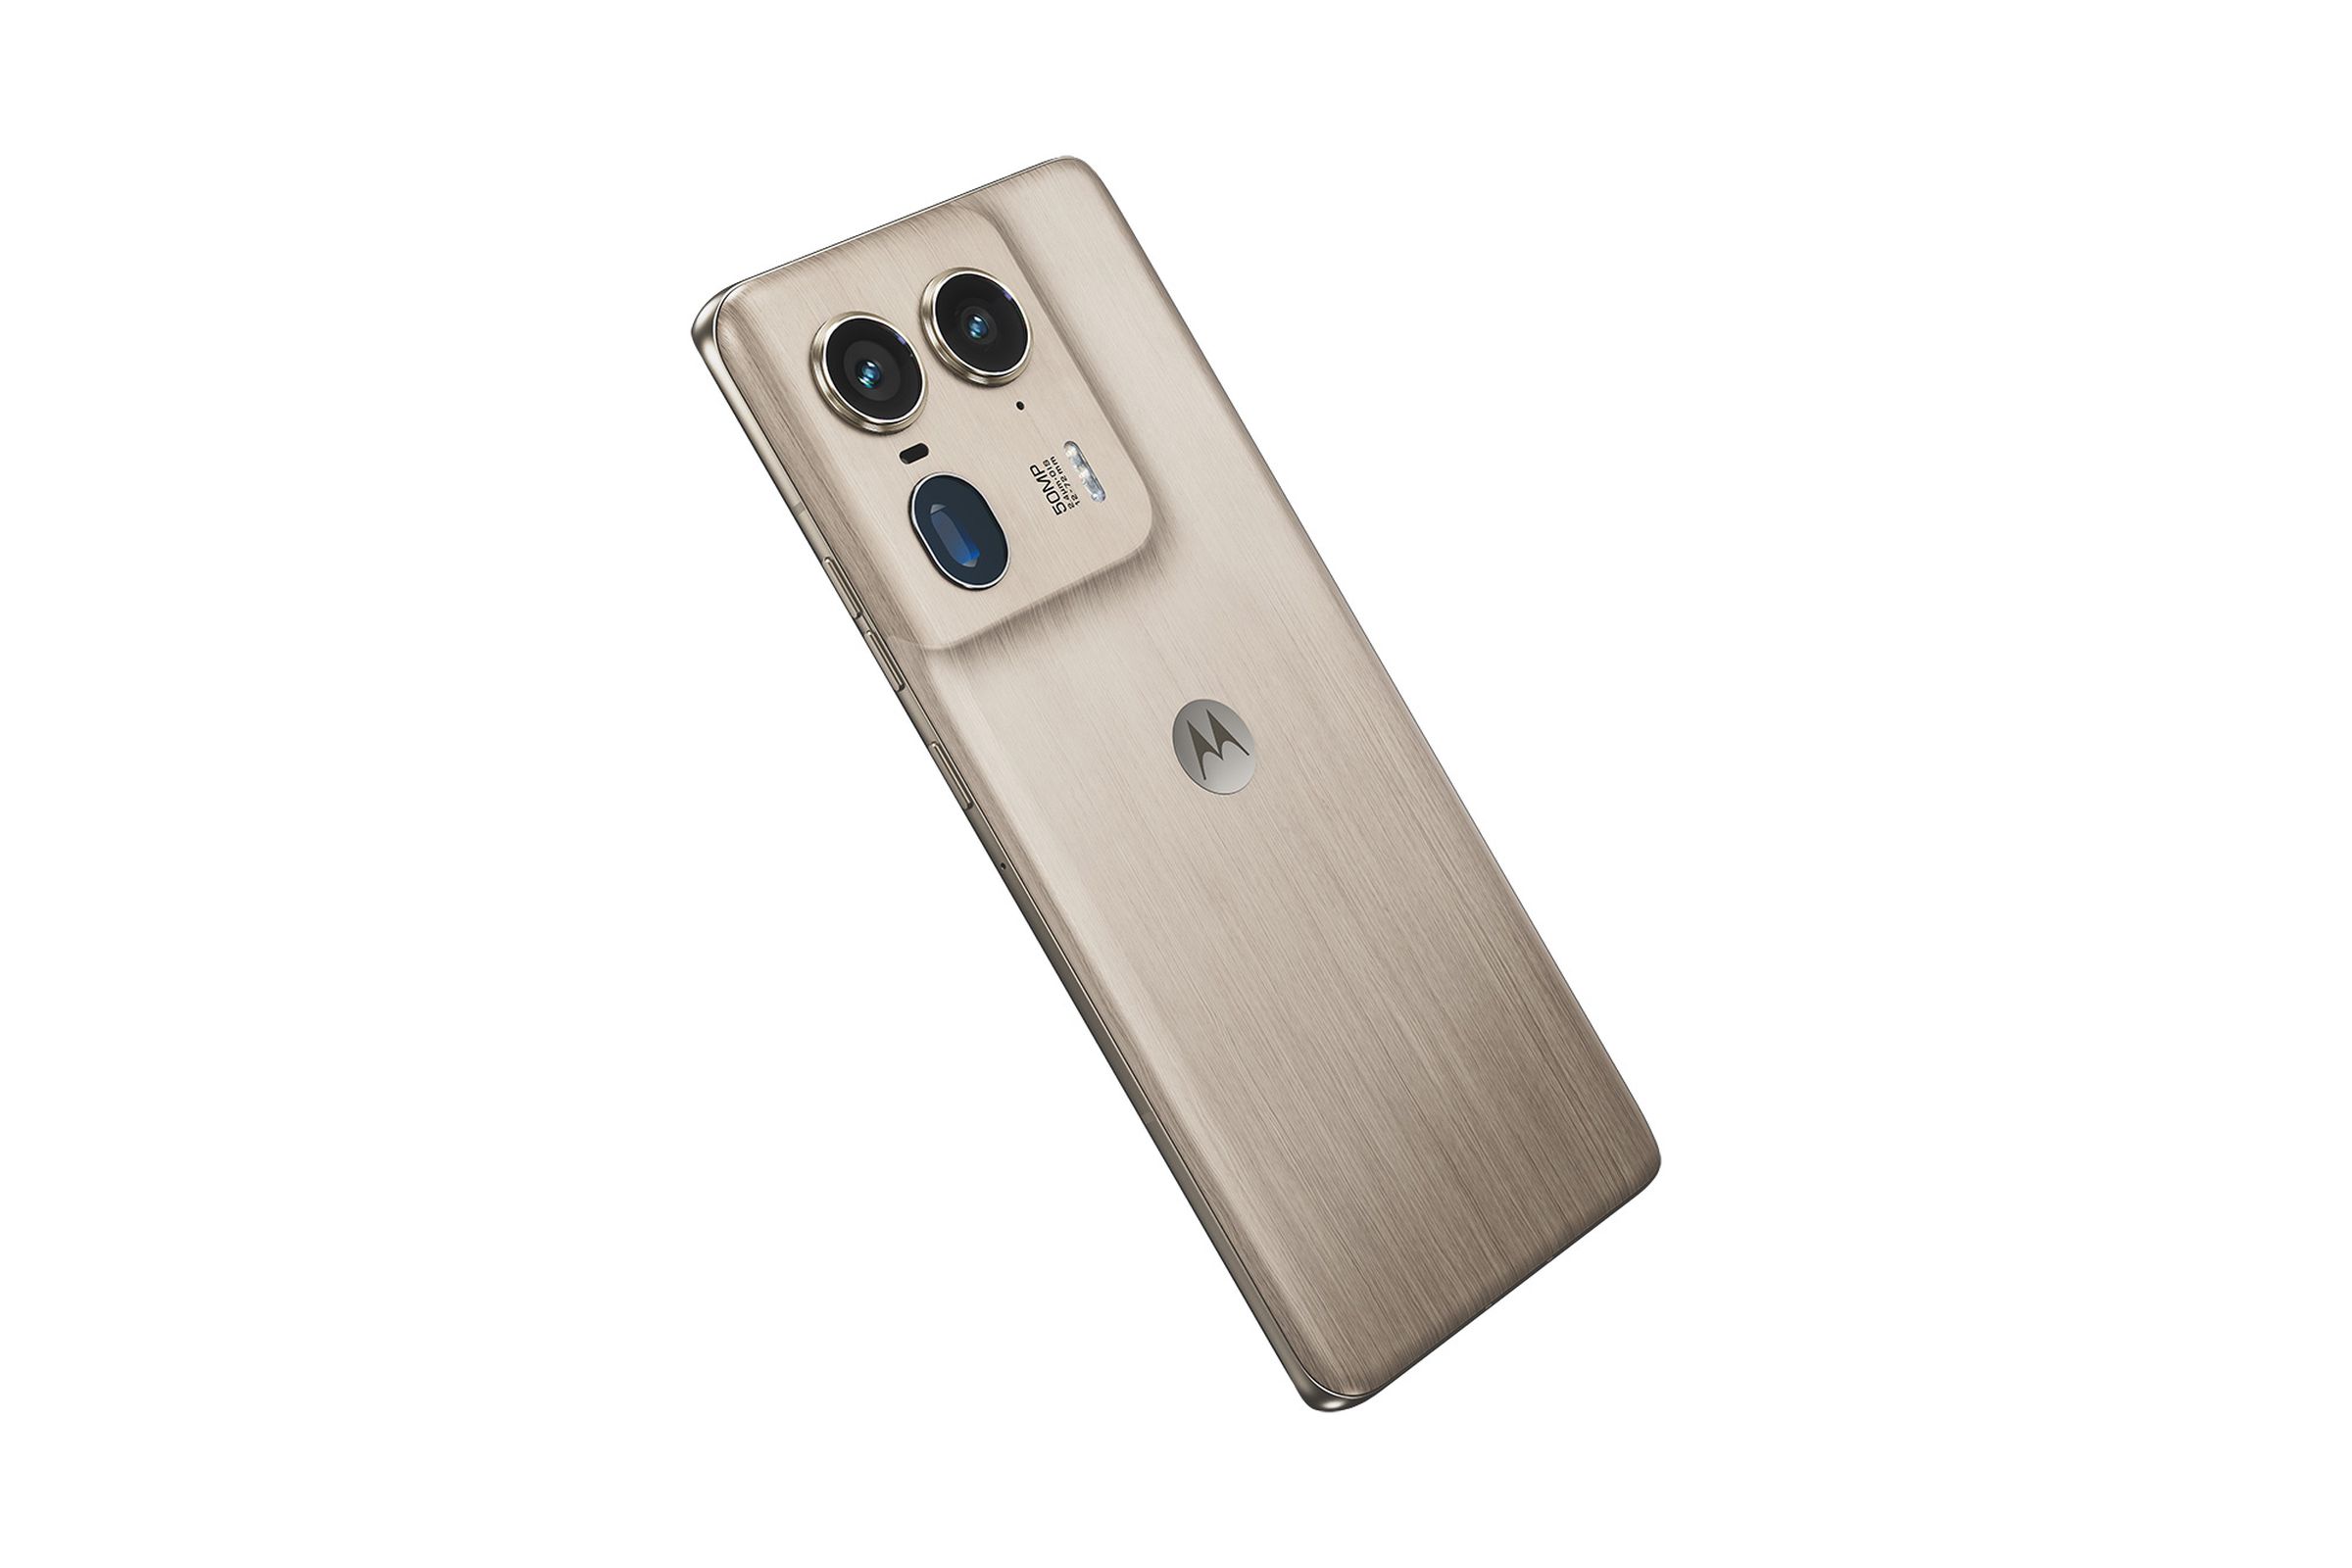 Nordic wood Motorola phone rendering showing back panel.